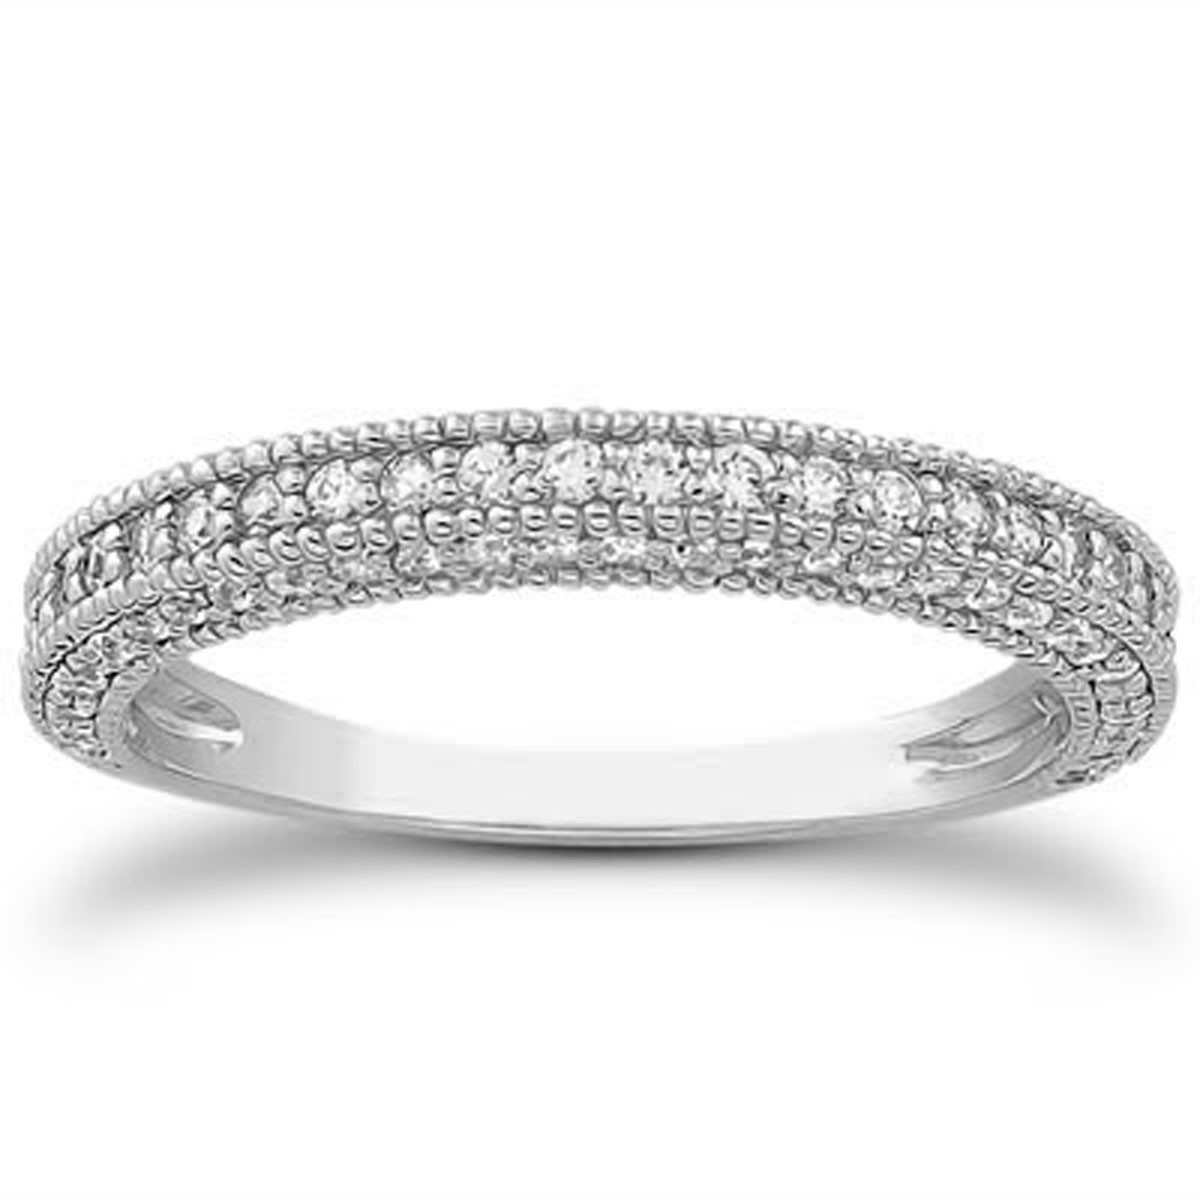 Fancy Pave Diamond Milgrain Wedding Ring Band in 14k White